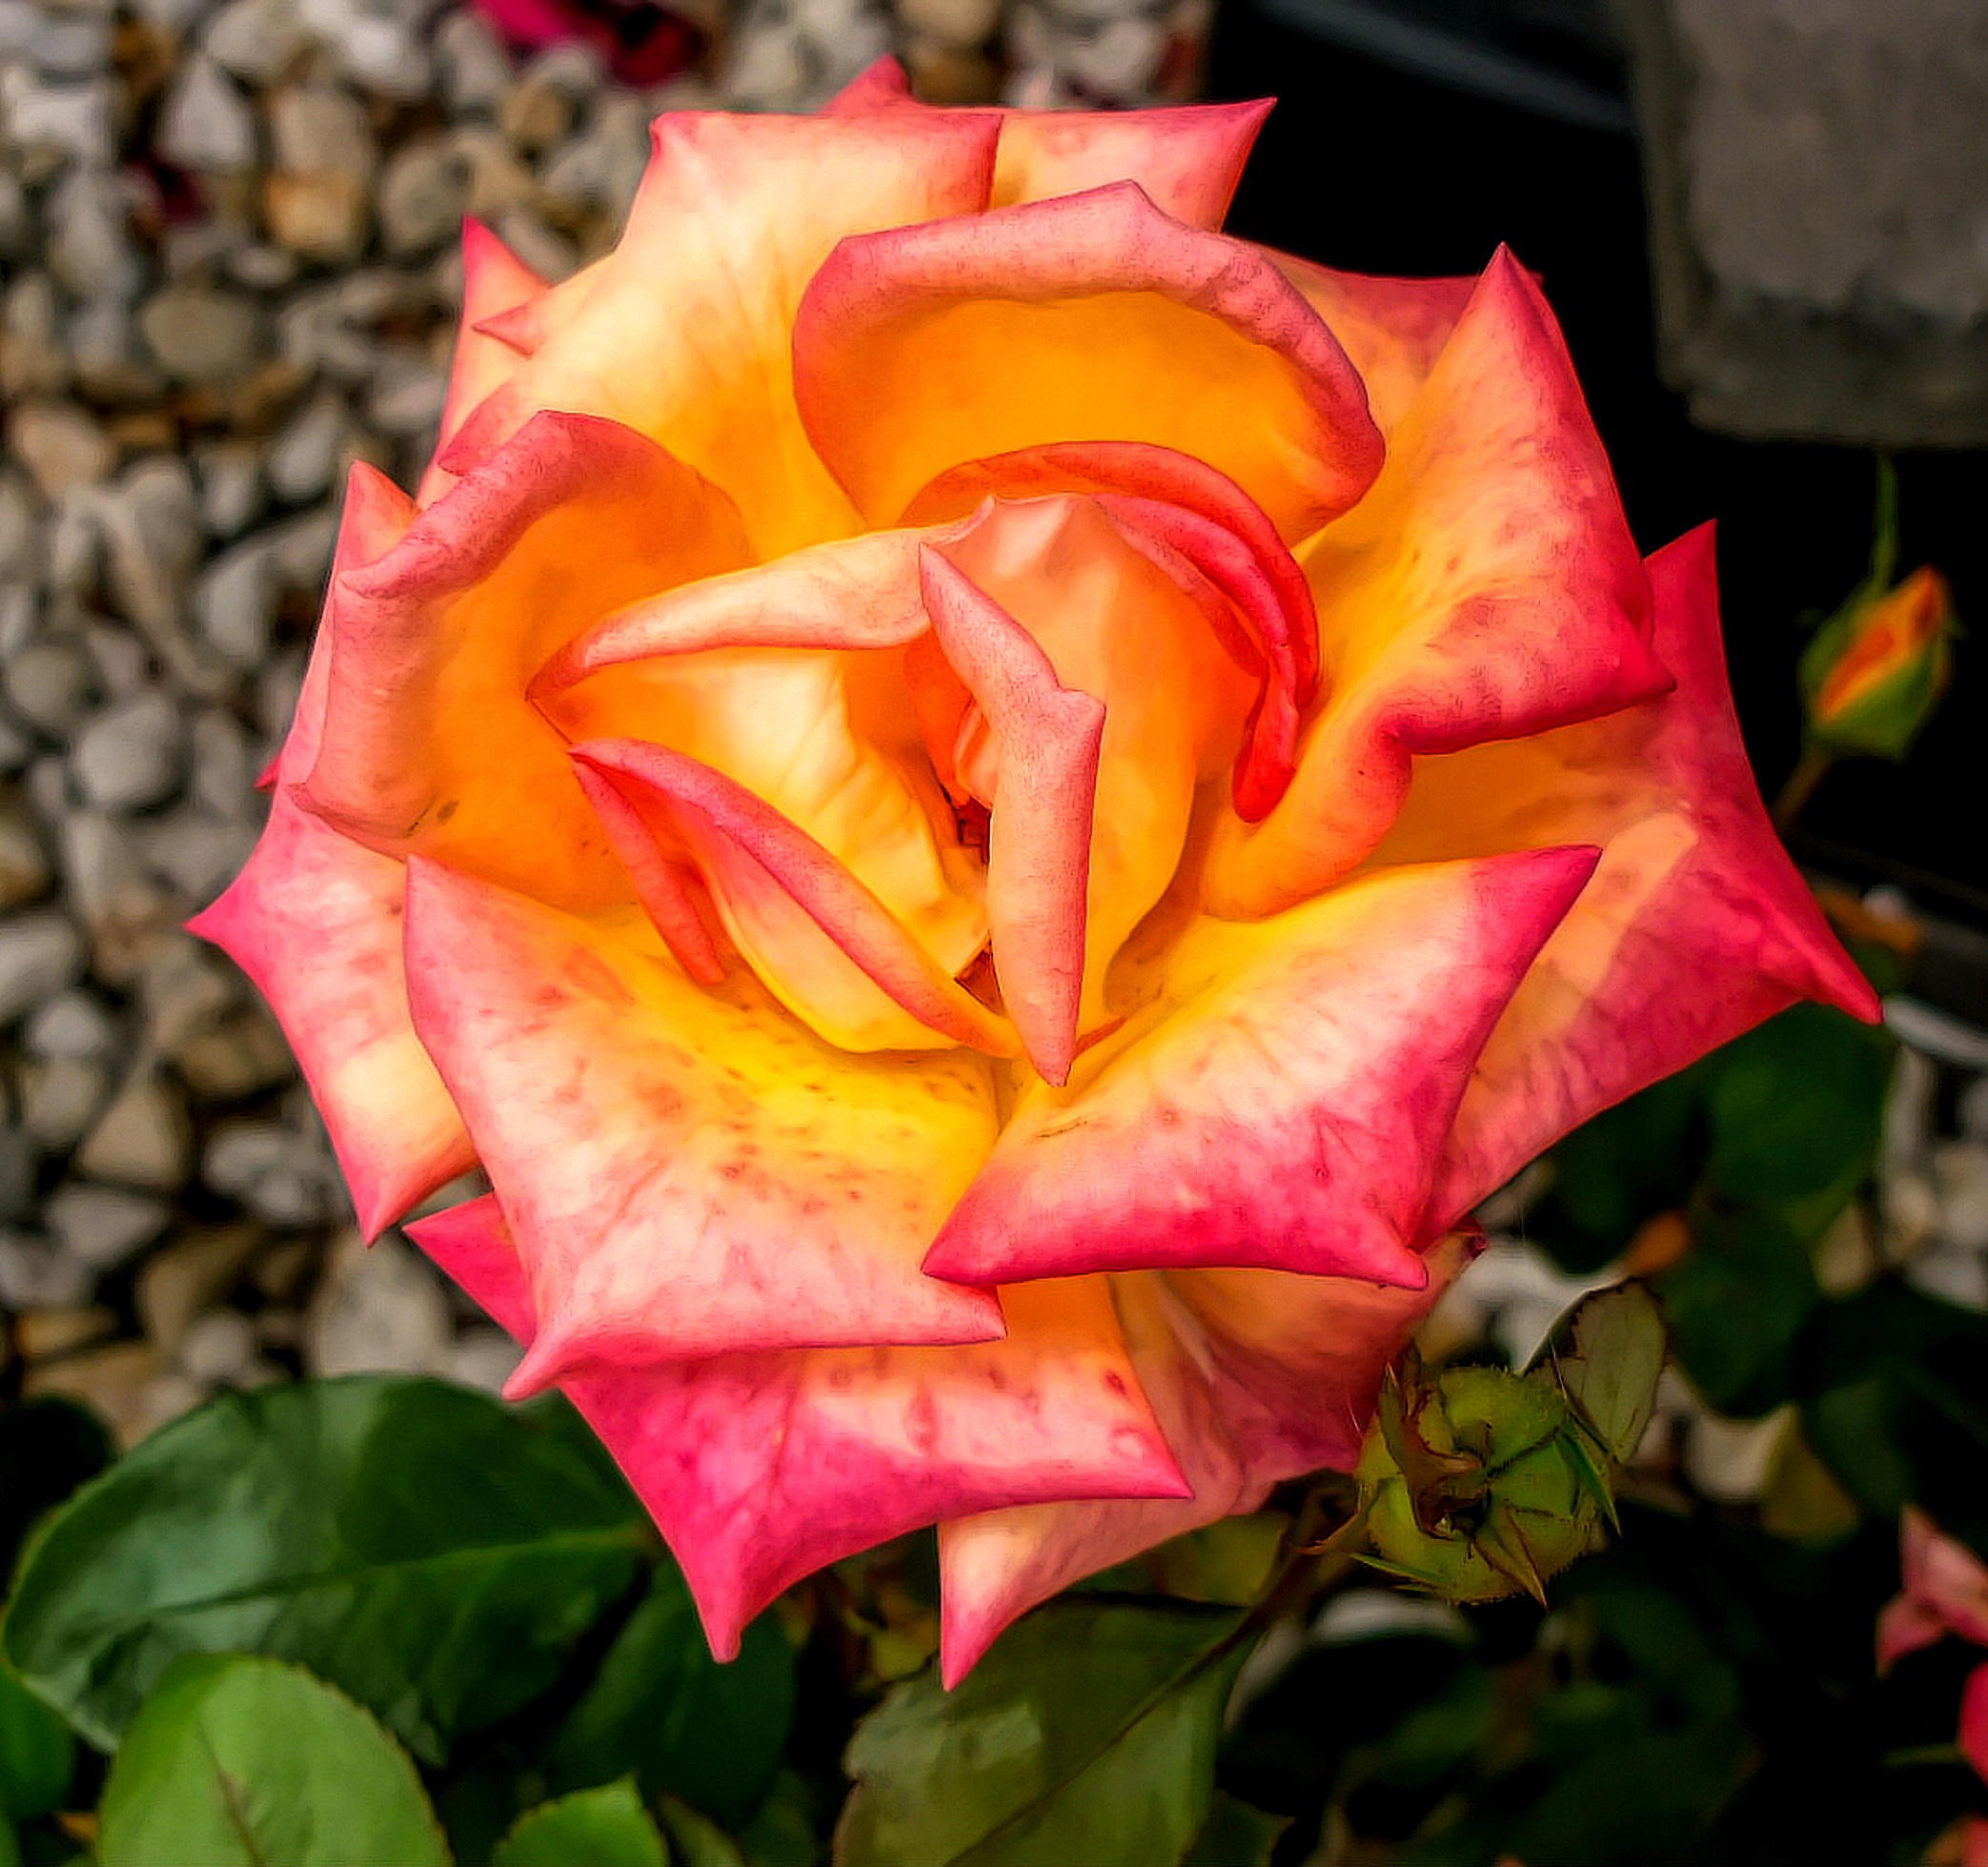 flower-rose-petal-free-image-download